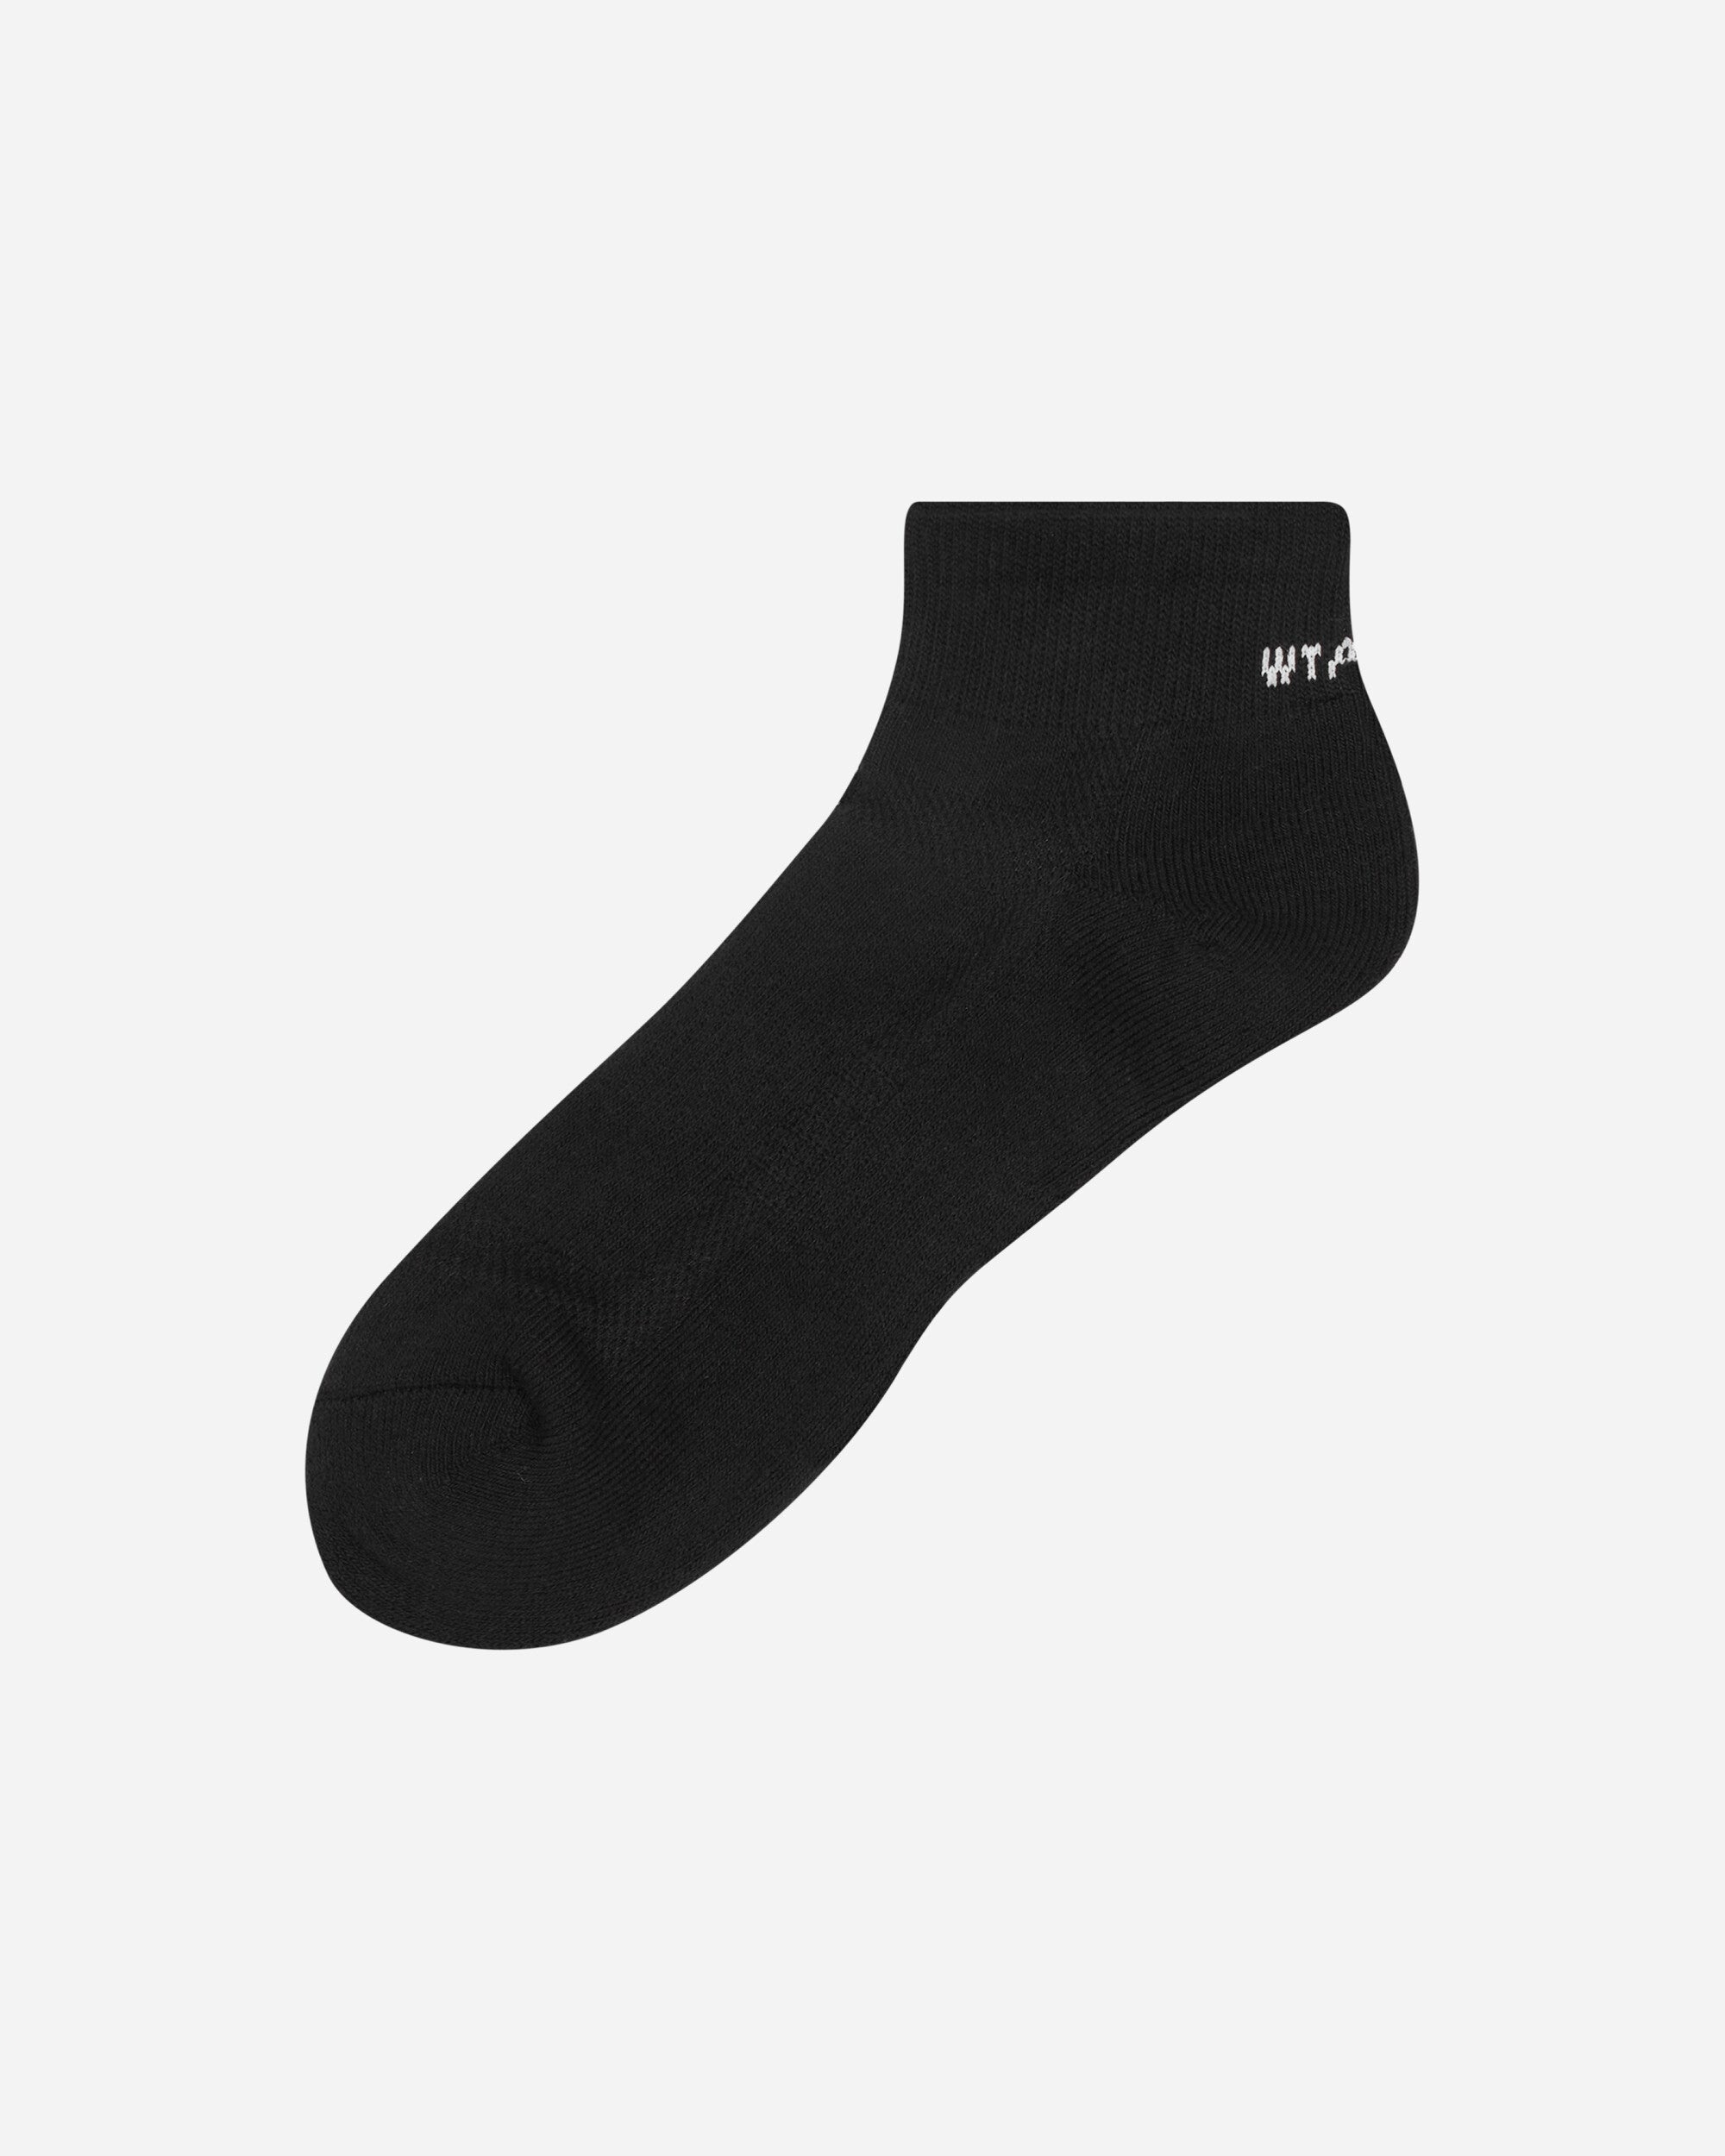 Skivvies Socks Black - 3